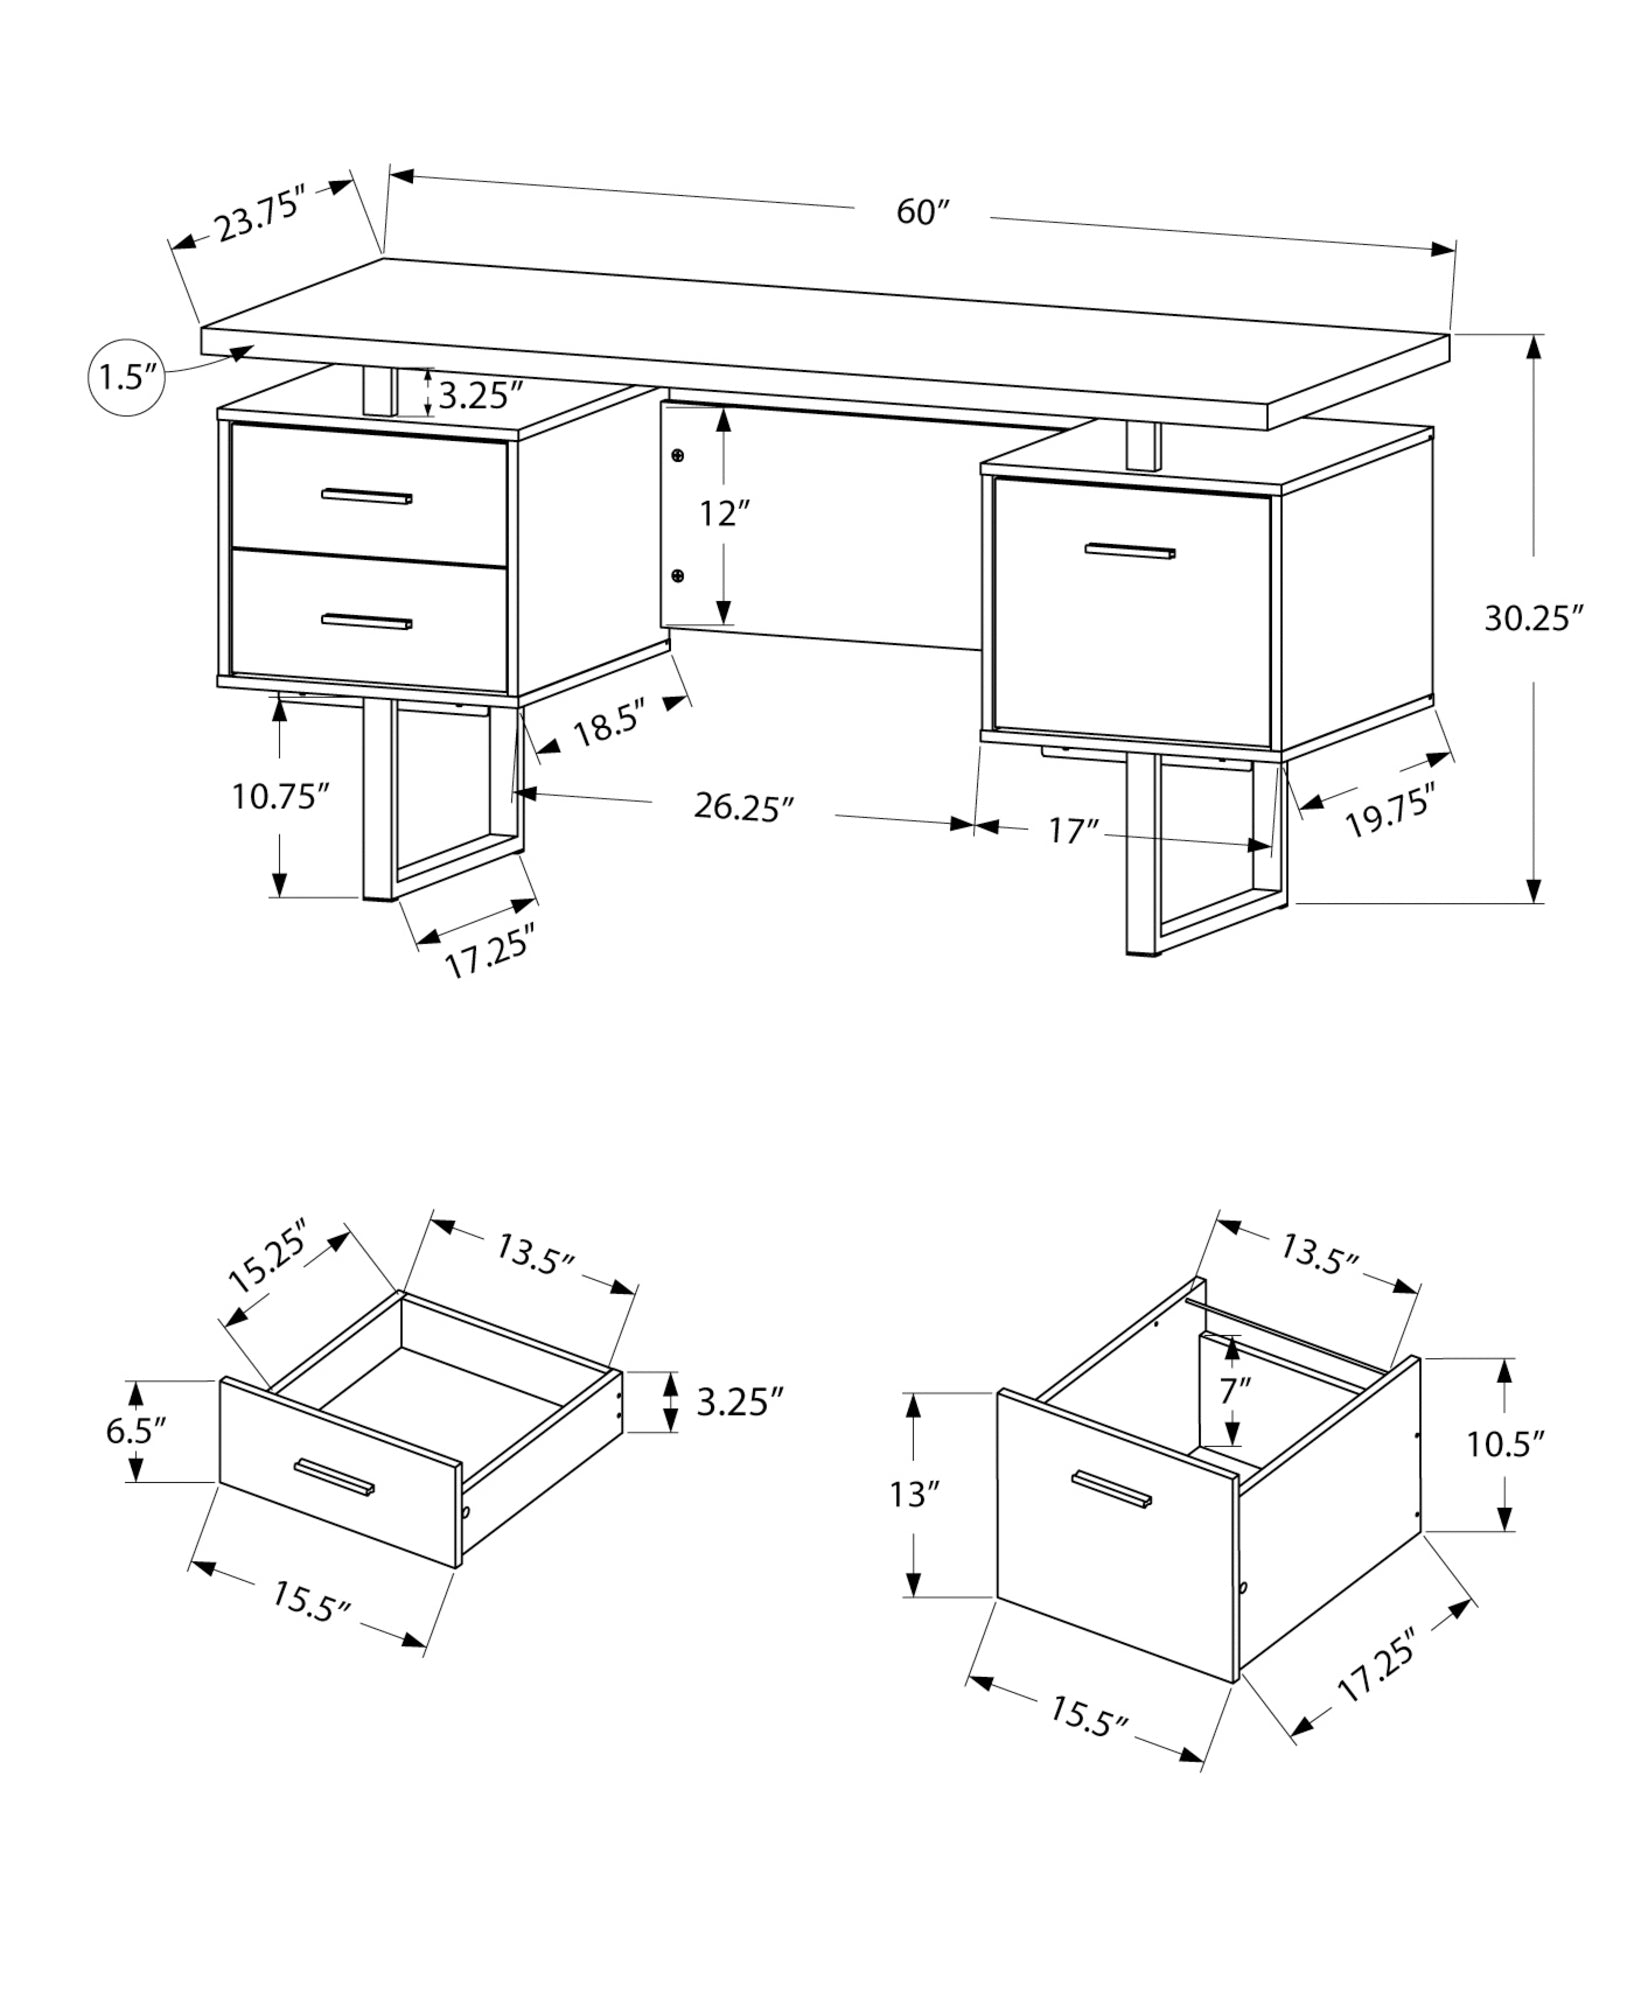 Computer Desk - 60L / White/ Grey Concrete/ Silver Metal